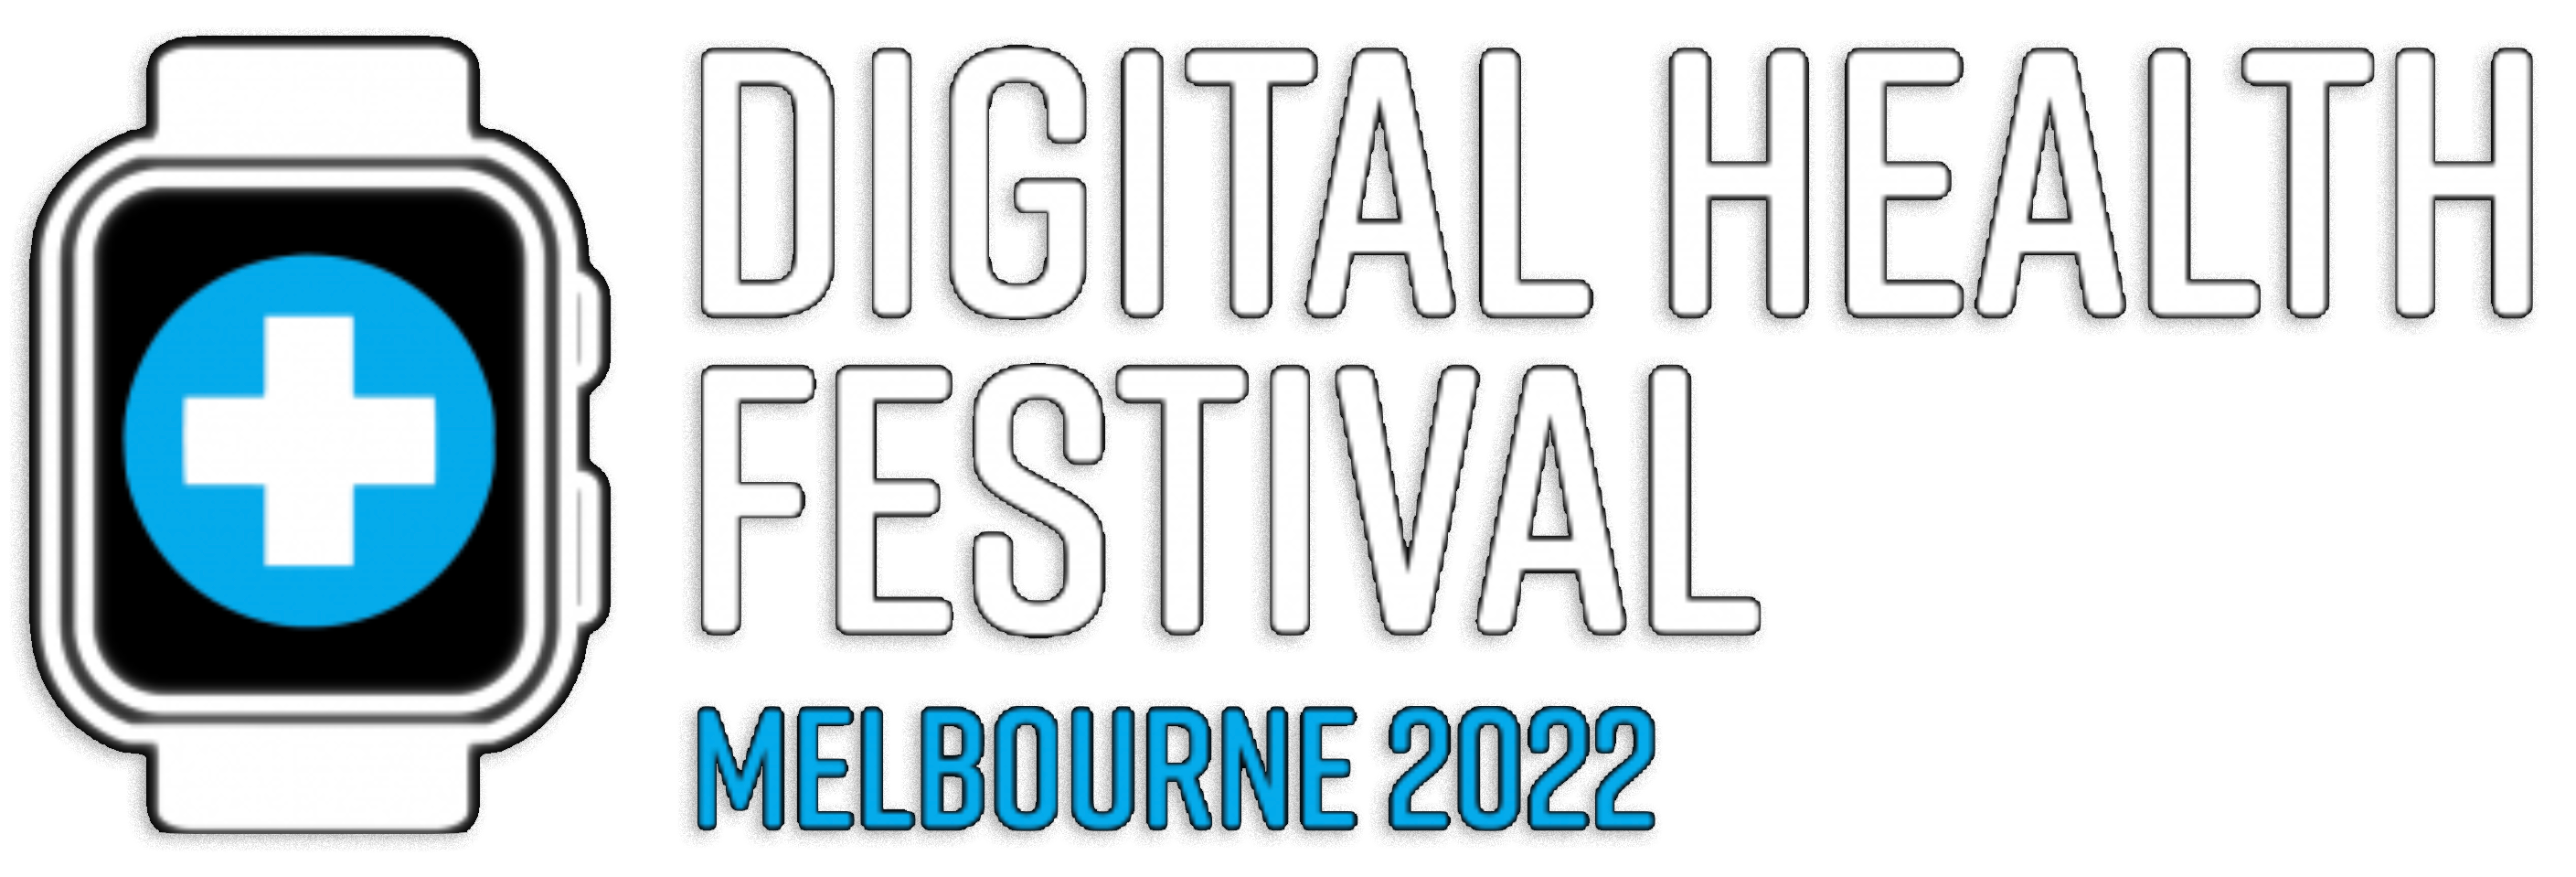 Digital Health Festival Melbourne 2022